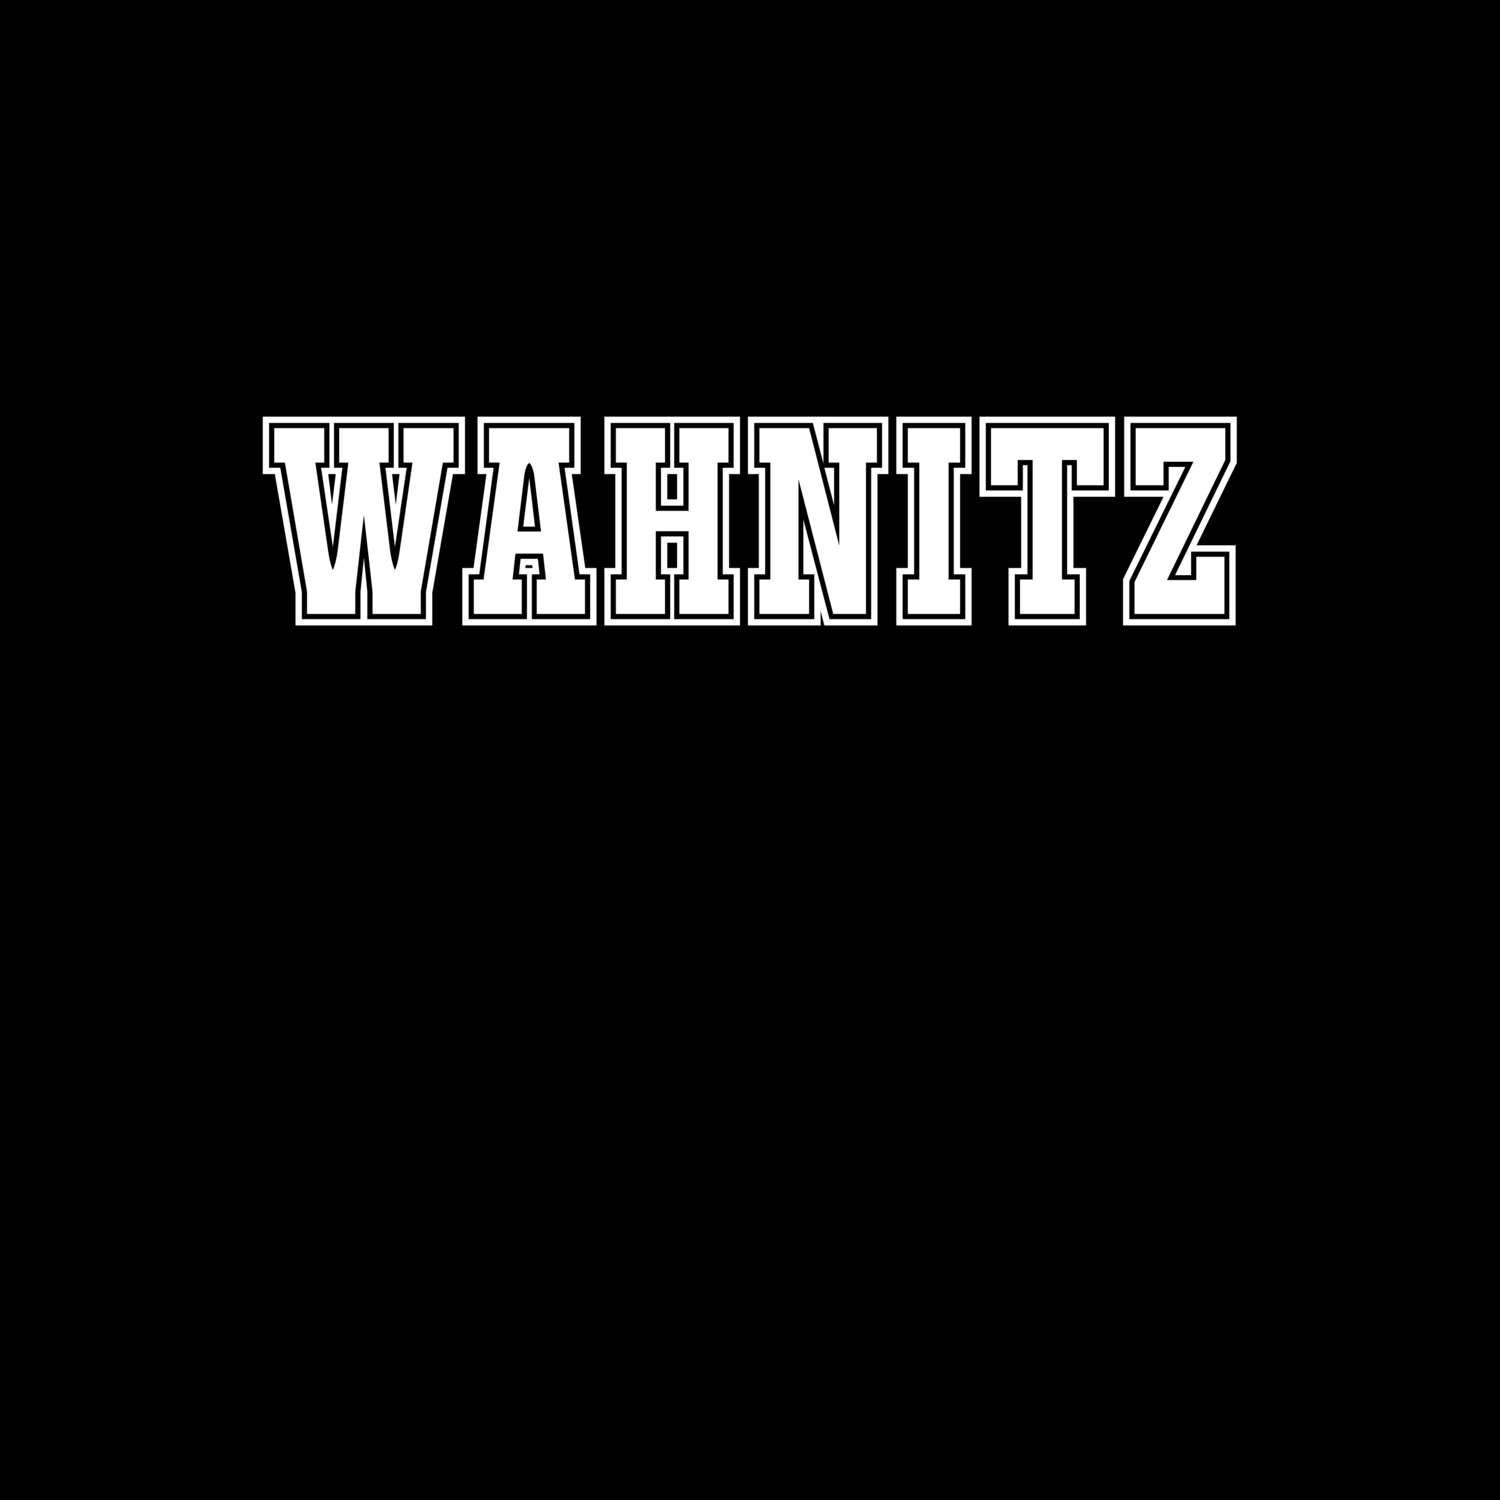 Wahnitz T-Shirt »Classic«